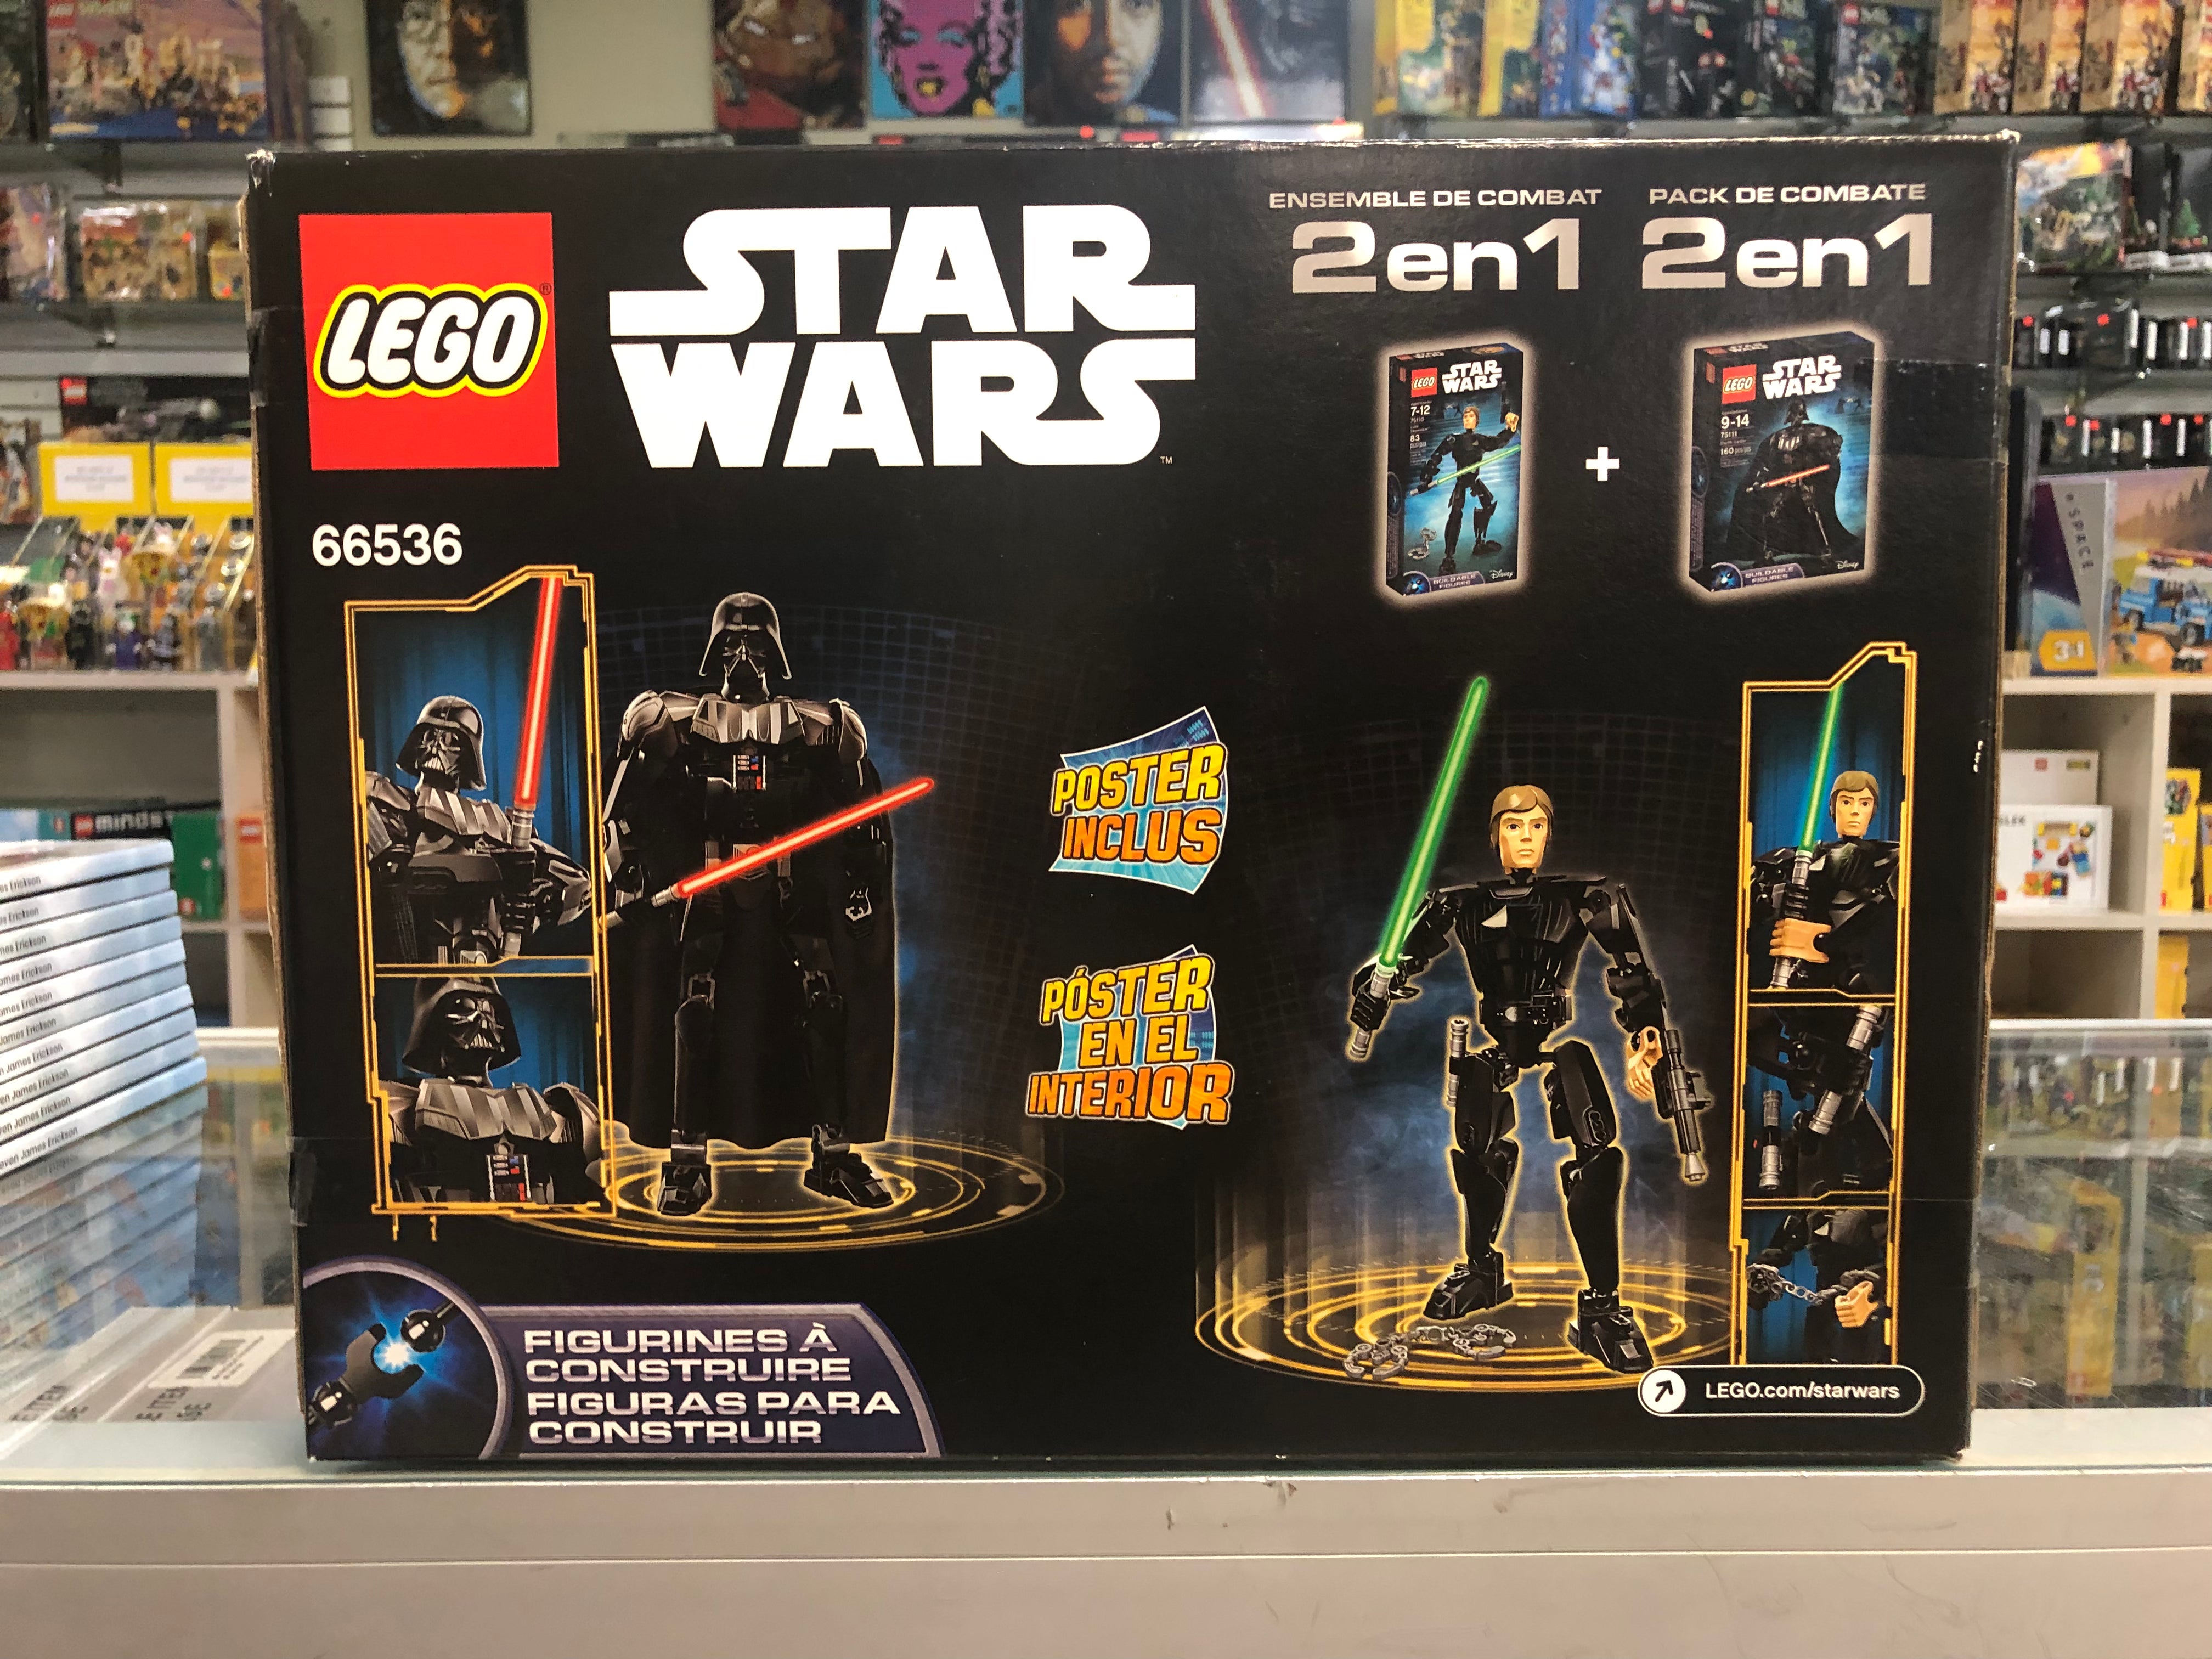 Star Wars Bundle Pack, Battle Pack 2 in 1, 66536